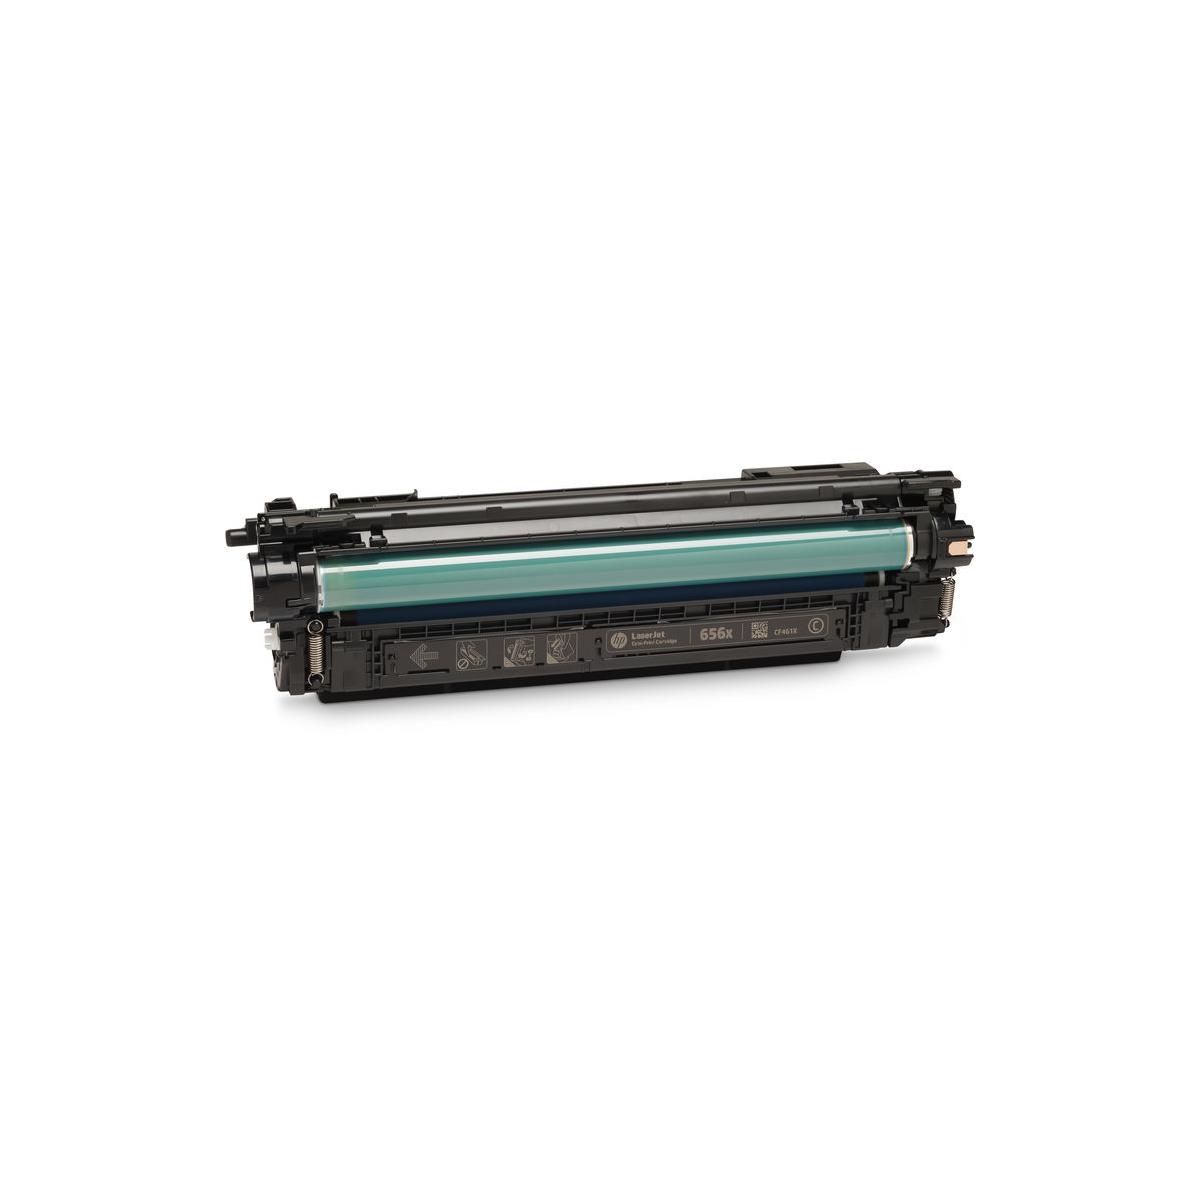 

HP 656X High Yield Cyan Laser Toner Cartridge for LaserJet Enterprise Printers